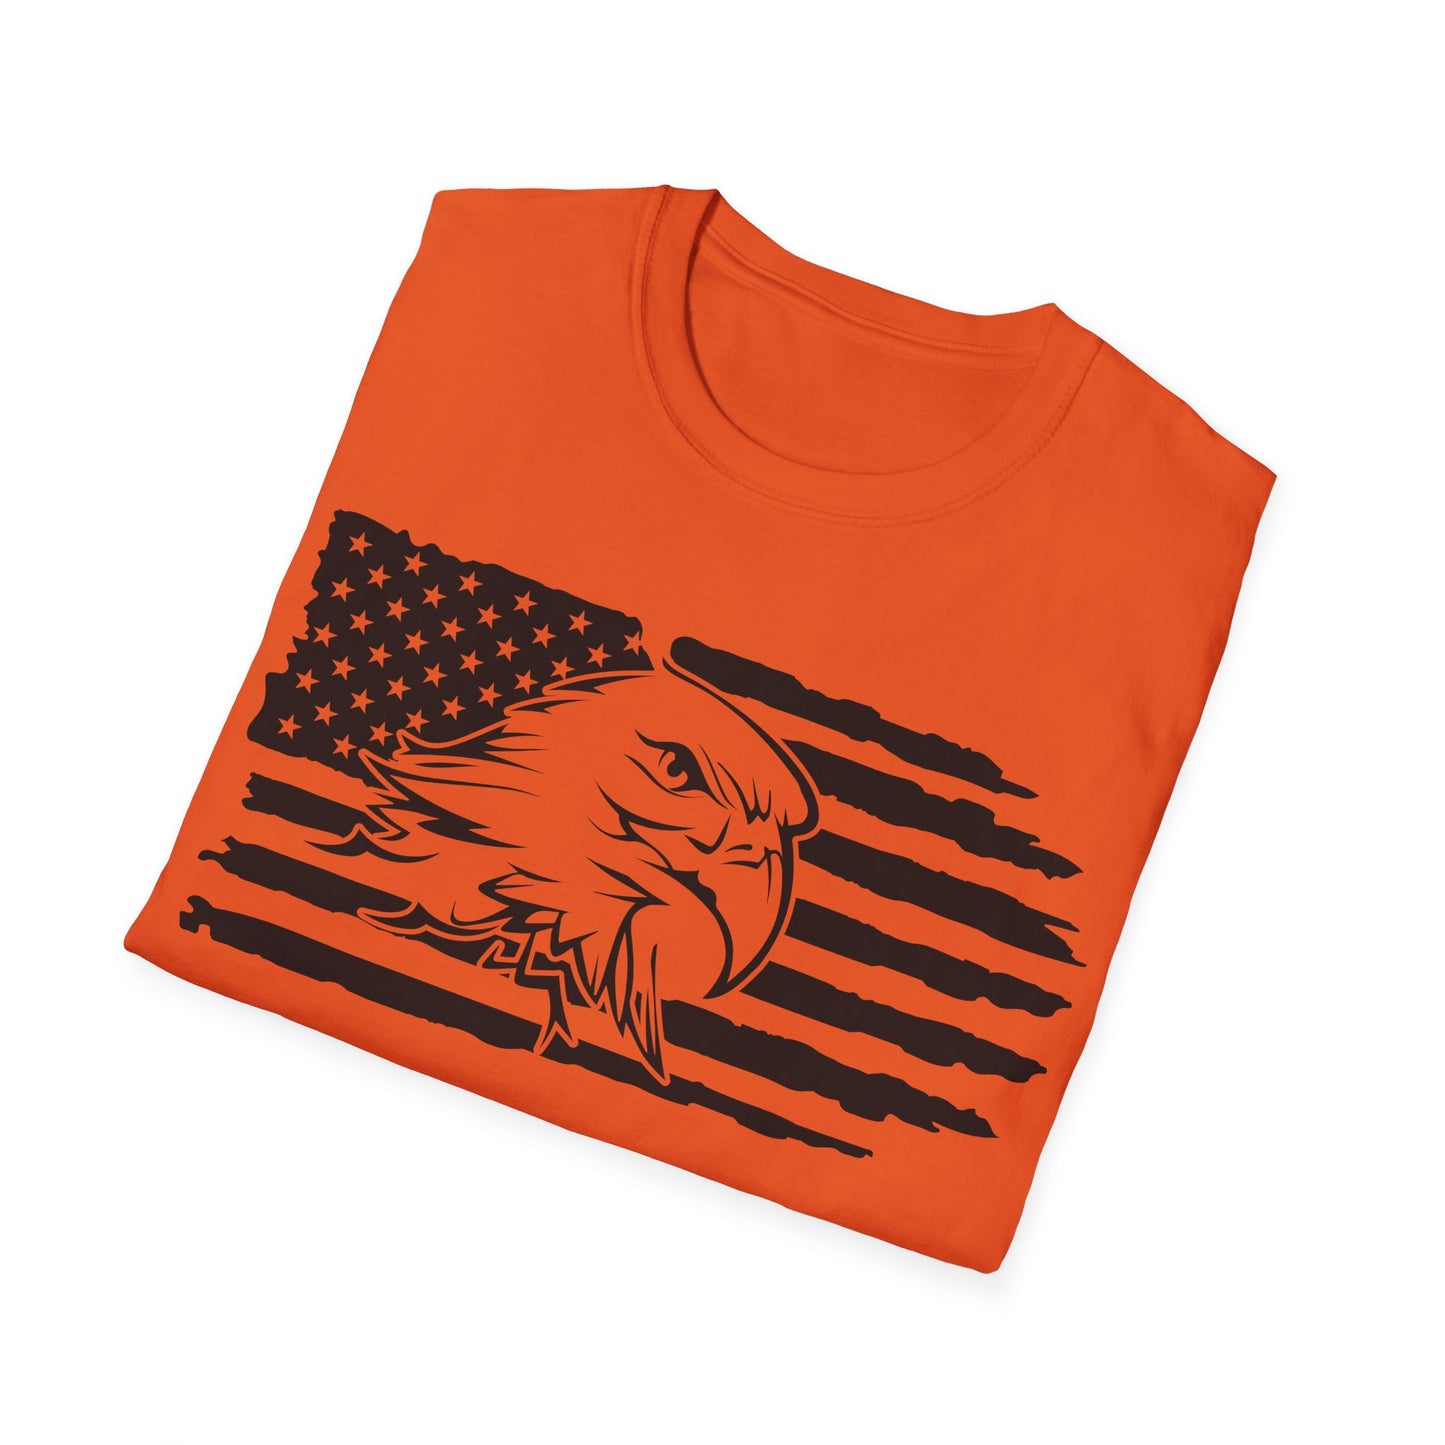 Distressed American Flag B&W - Eagle - Unisex Softstyle T-Shirt